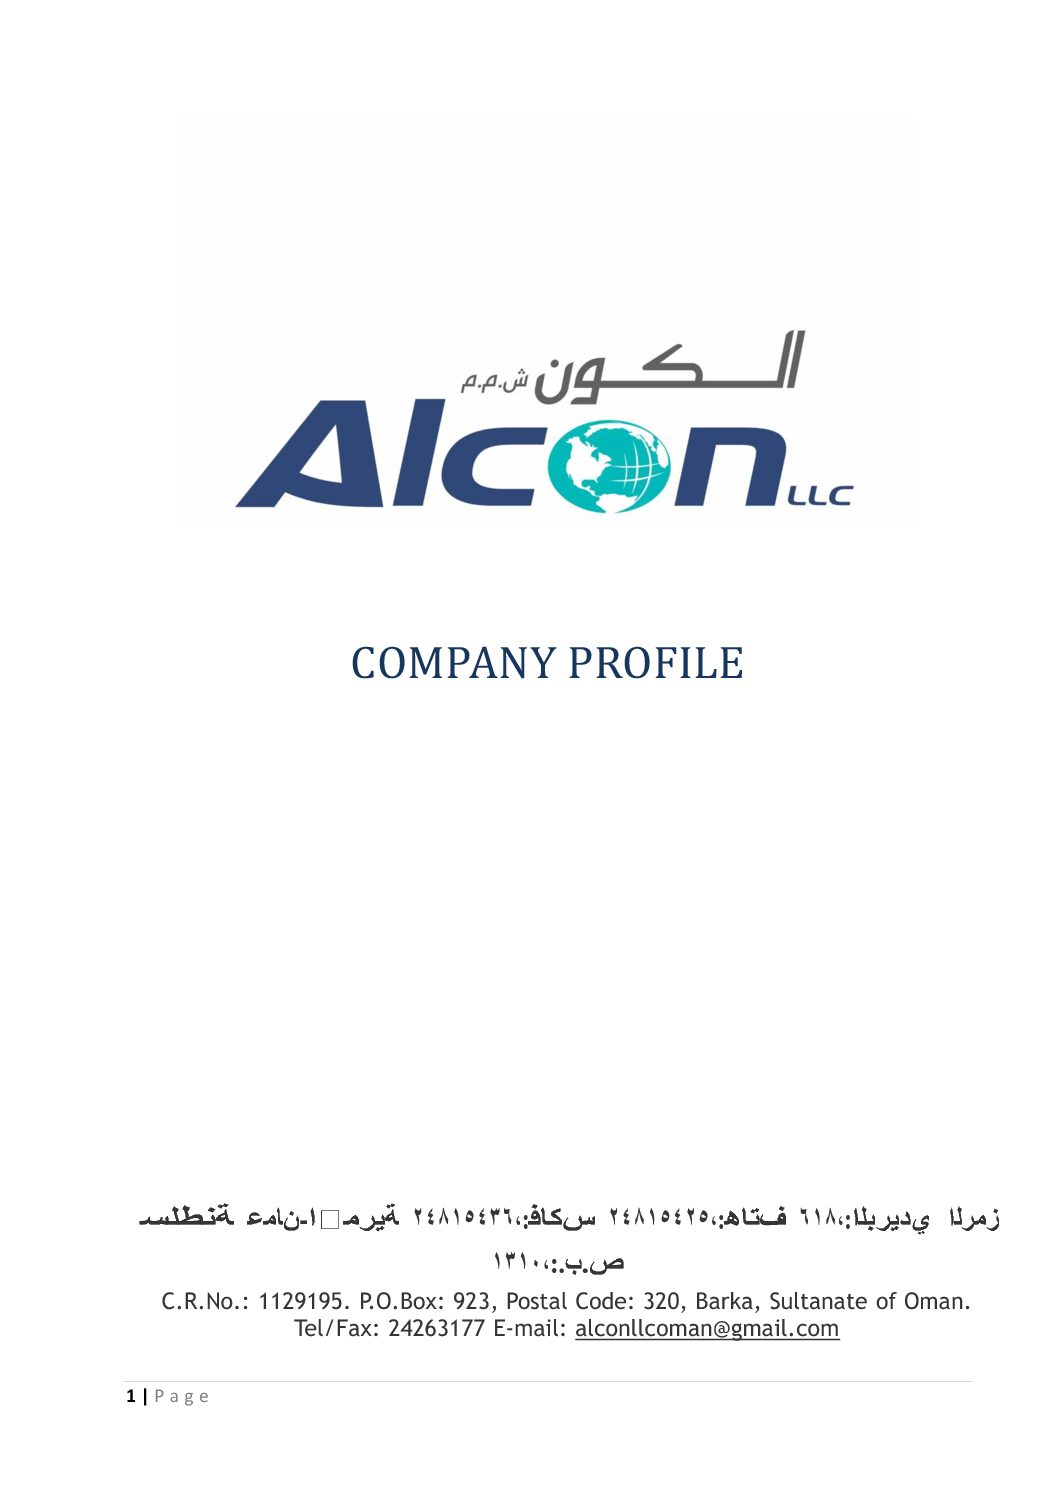 ALCON LLC